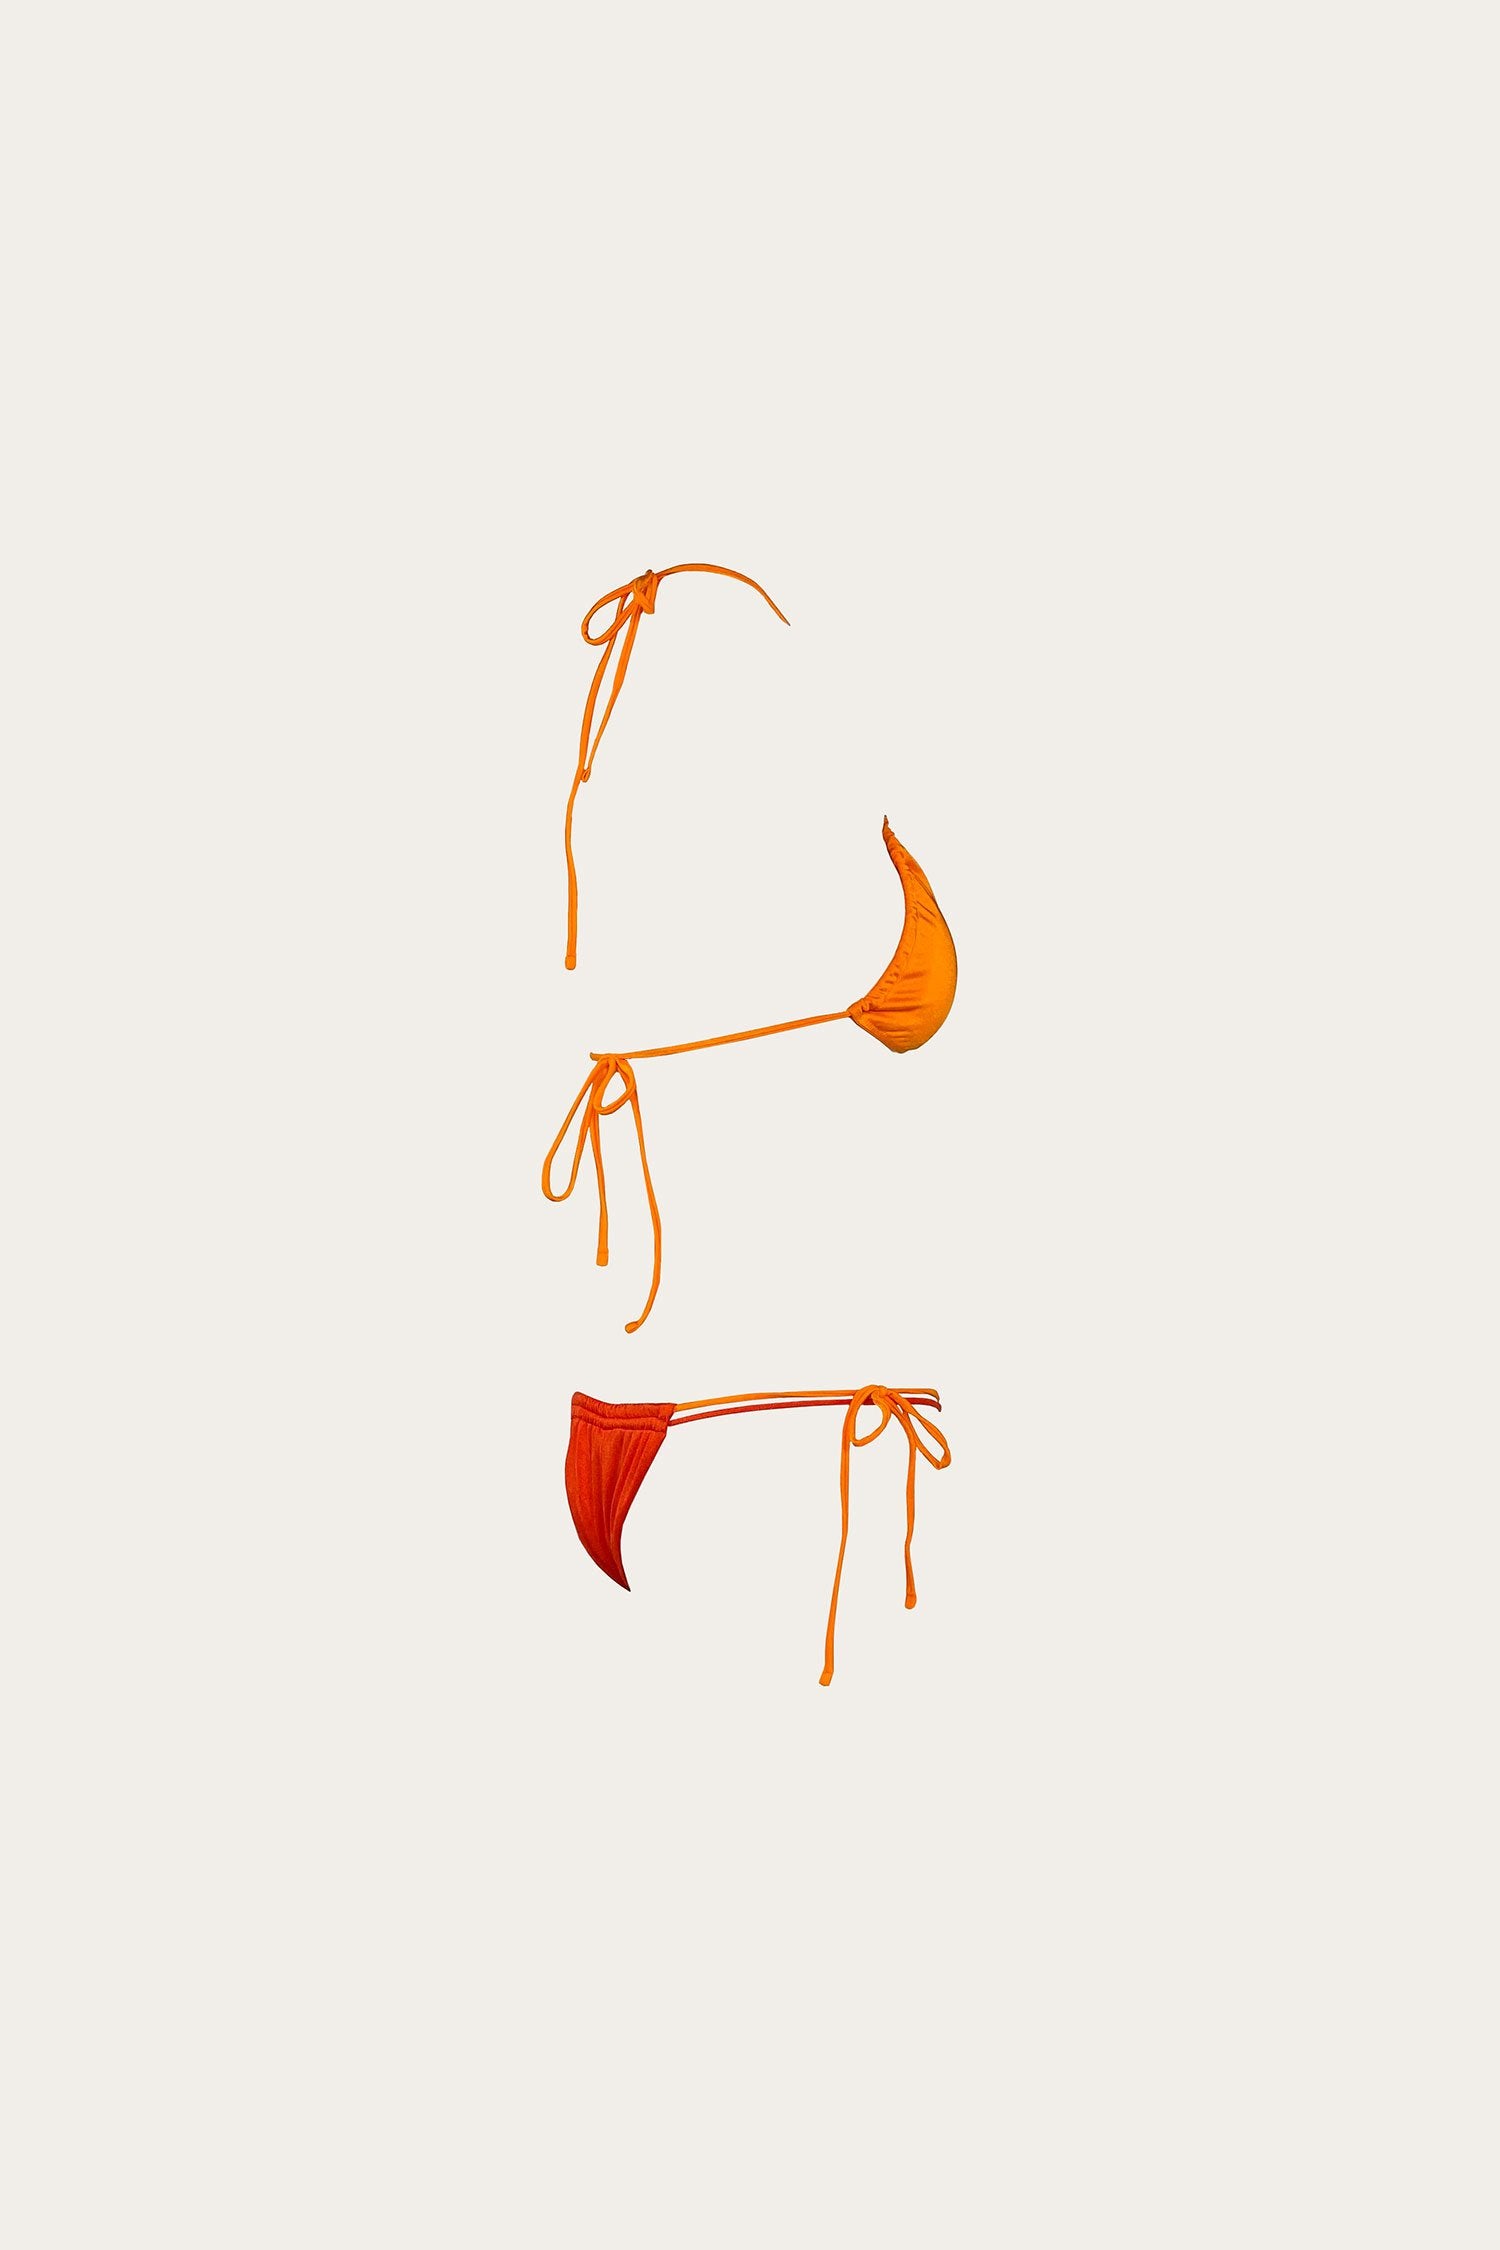 Orange bikini with metallic detail and adjustable ties